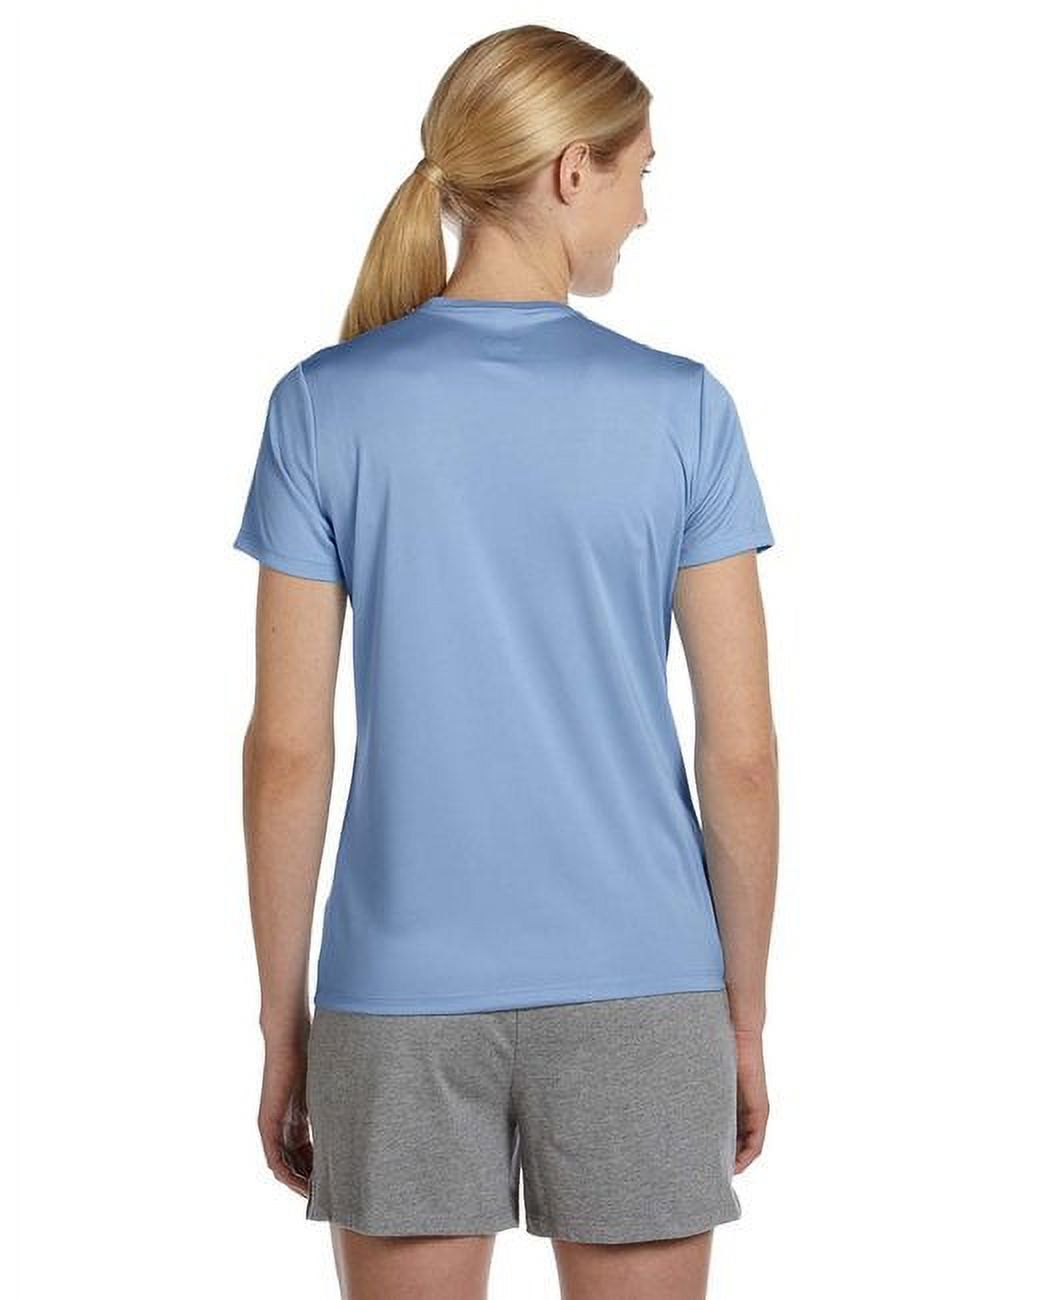 Hanes Sport Women's Cool DRI Performance T-Shirt - image 3 of 7